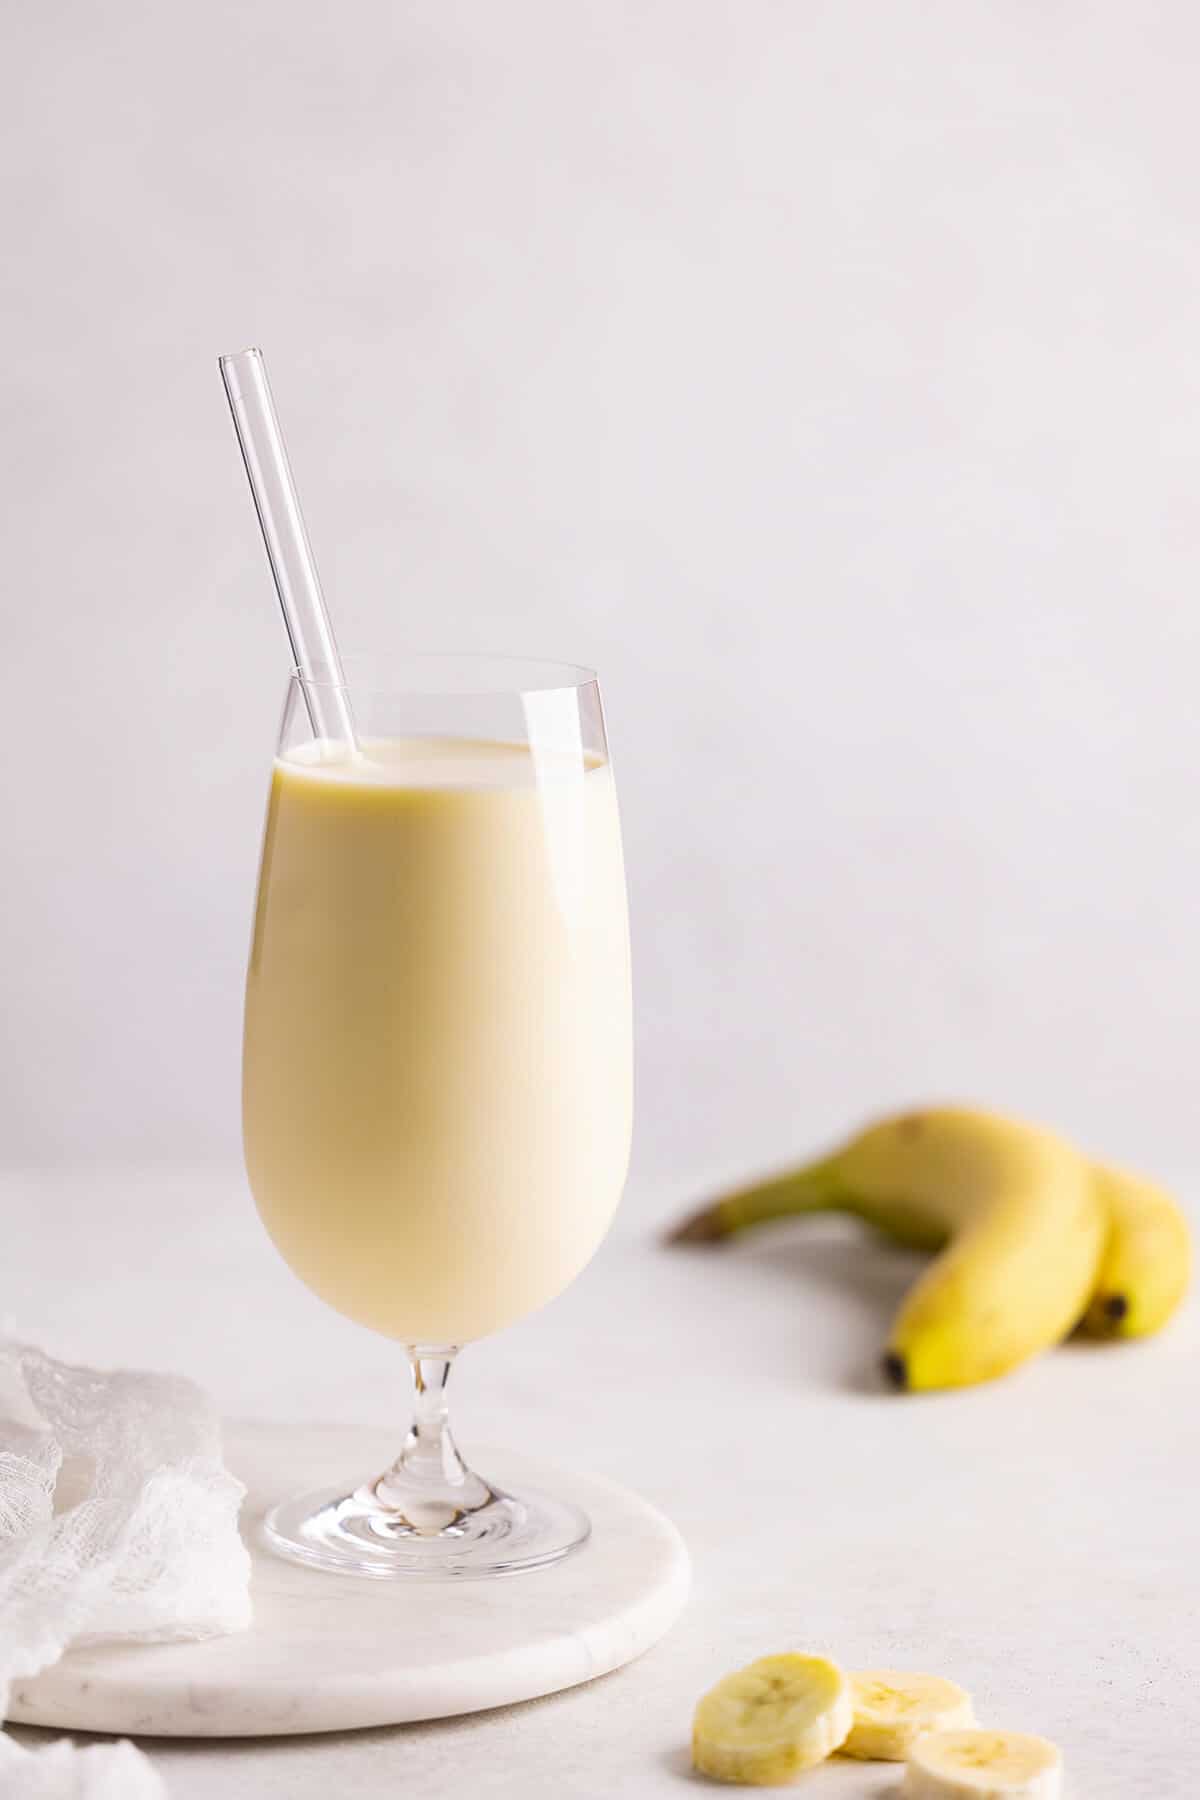 glass of banana milk with straw